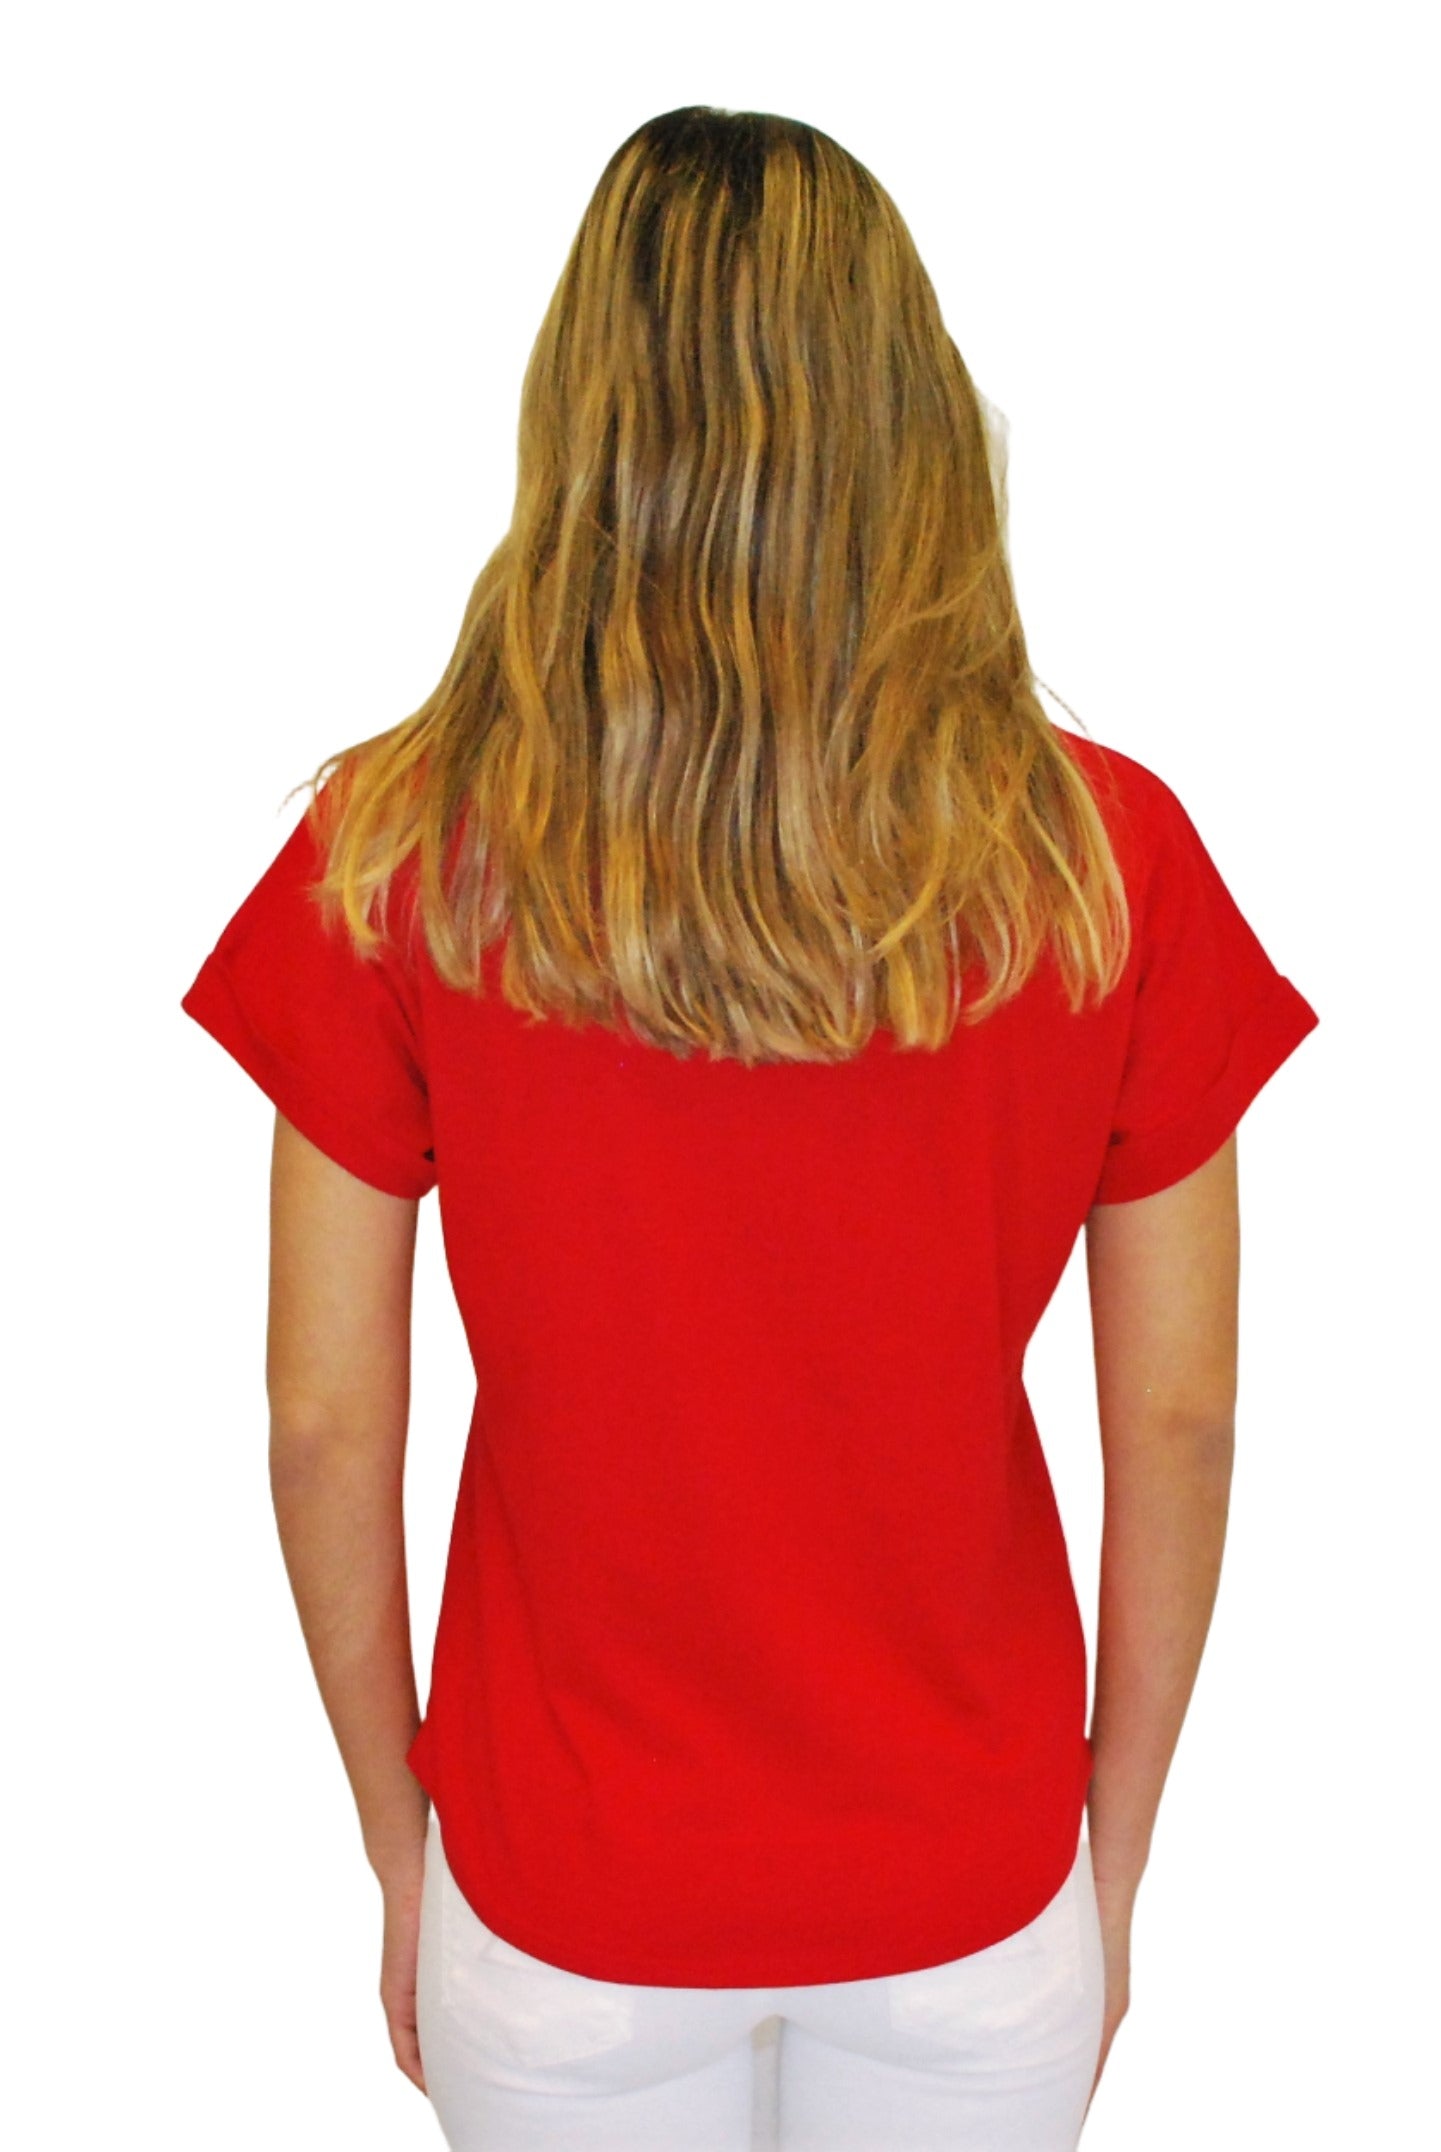 Ladies' Dolman shirt "Krasa" red